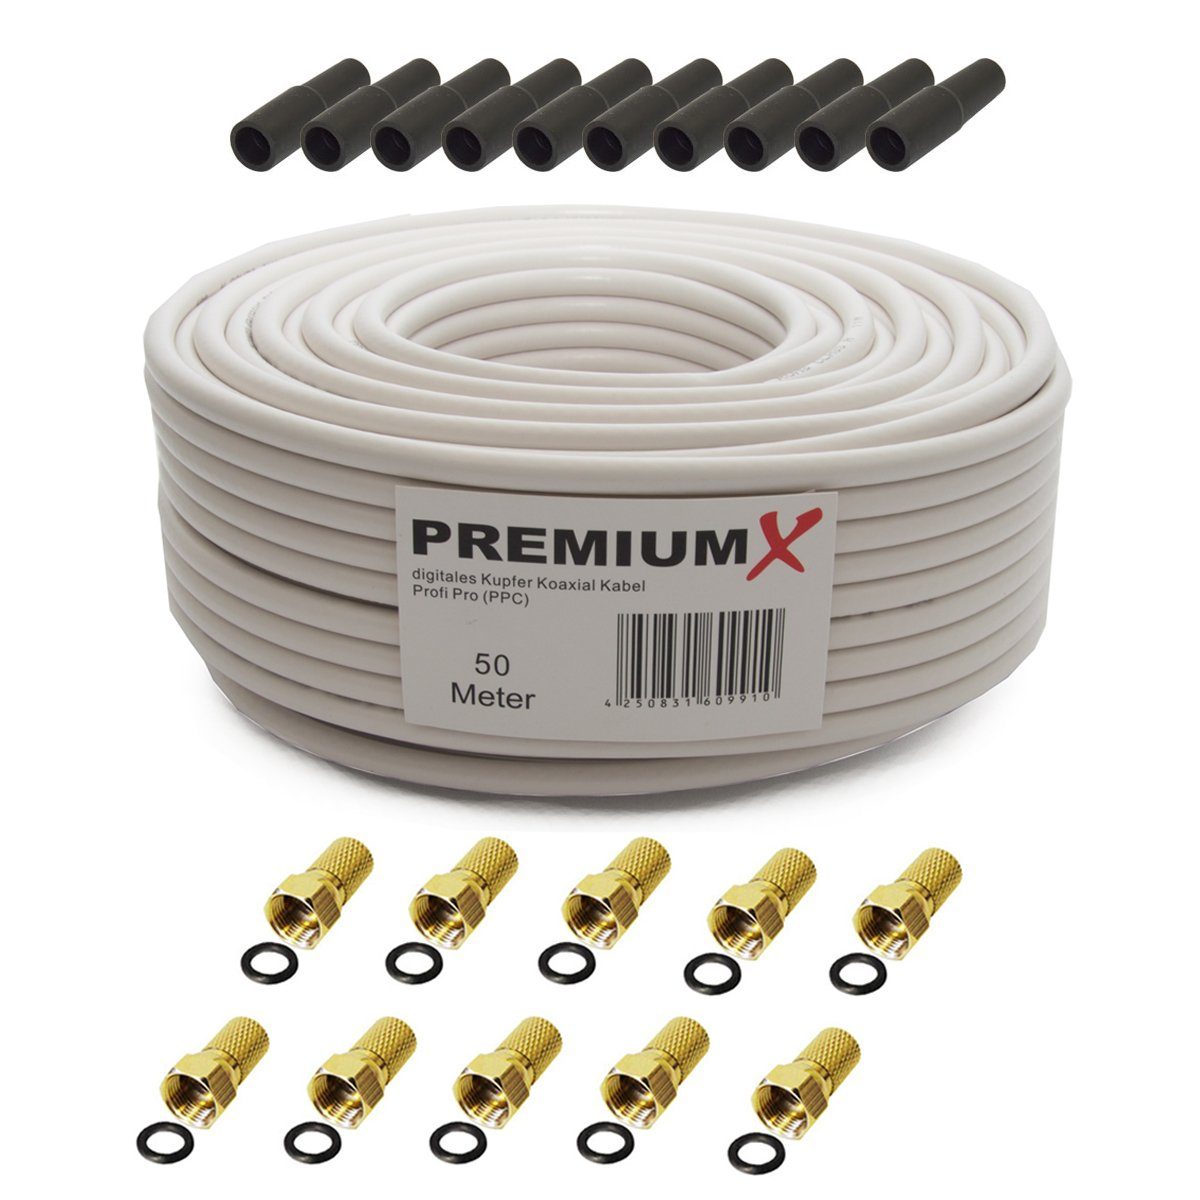 PremiumX PROFI PRO Kupfer Koaxial Kabel 50m Antennenkabel + 10x F-stecker 8 mm SAT-Kabel